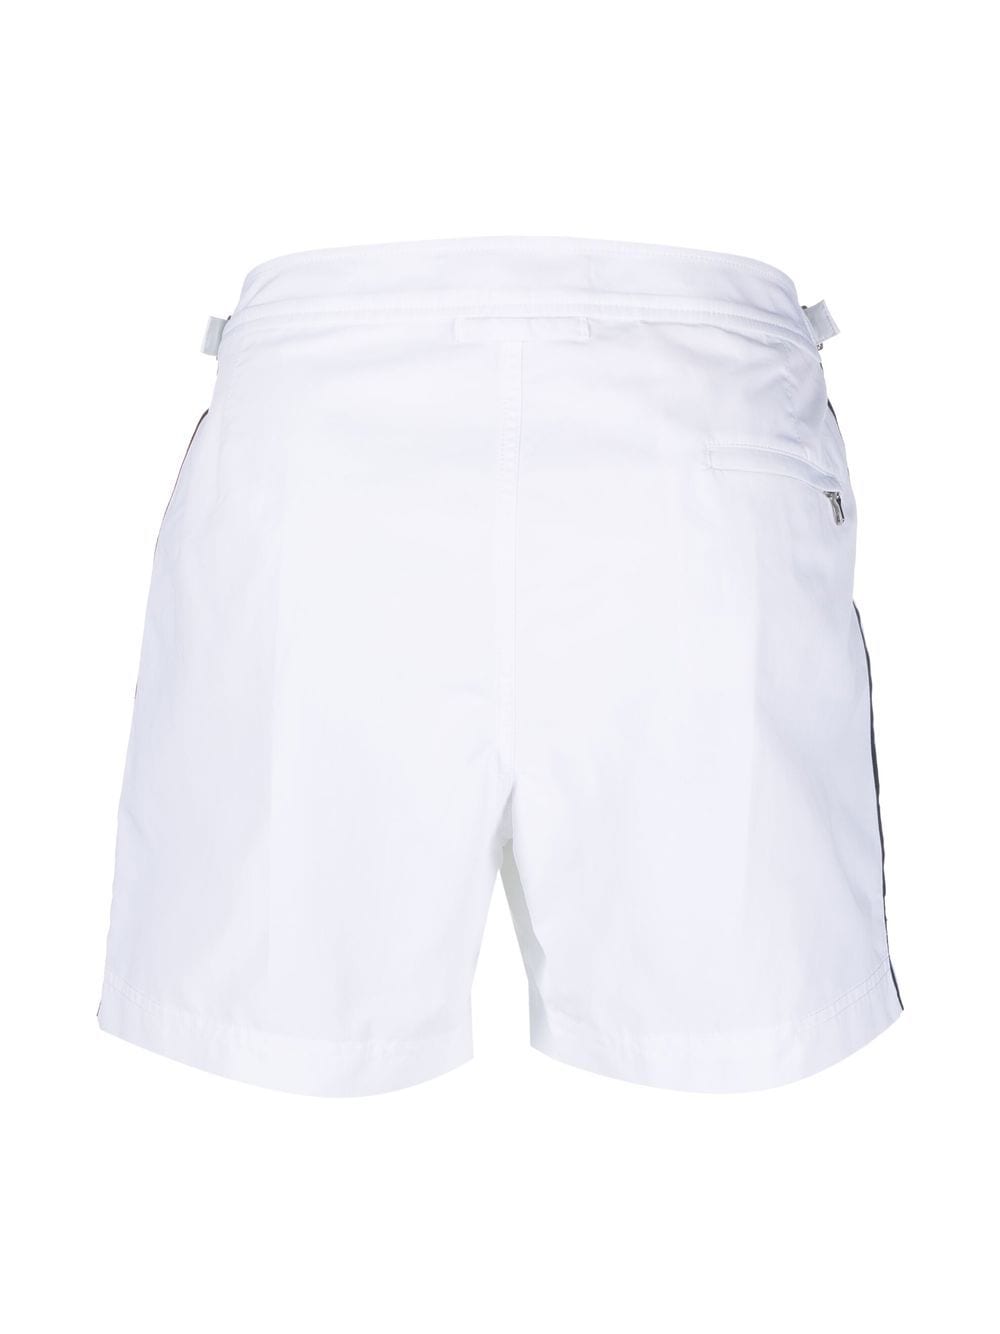 orlebar brown side-strap swim shorts - white